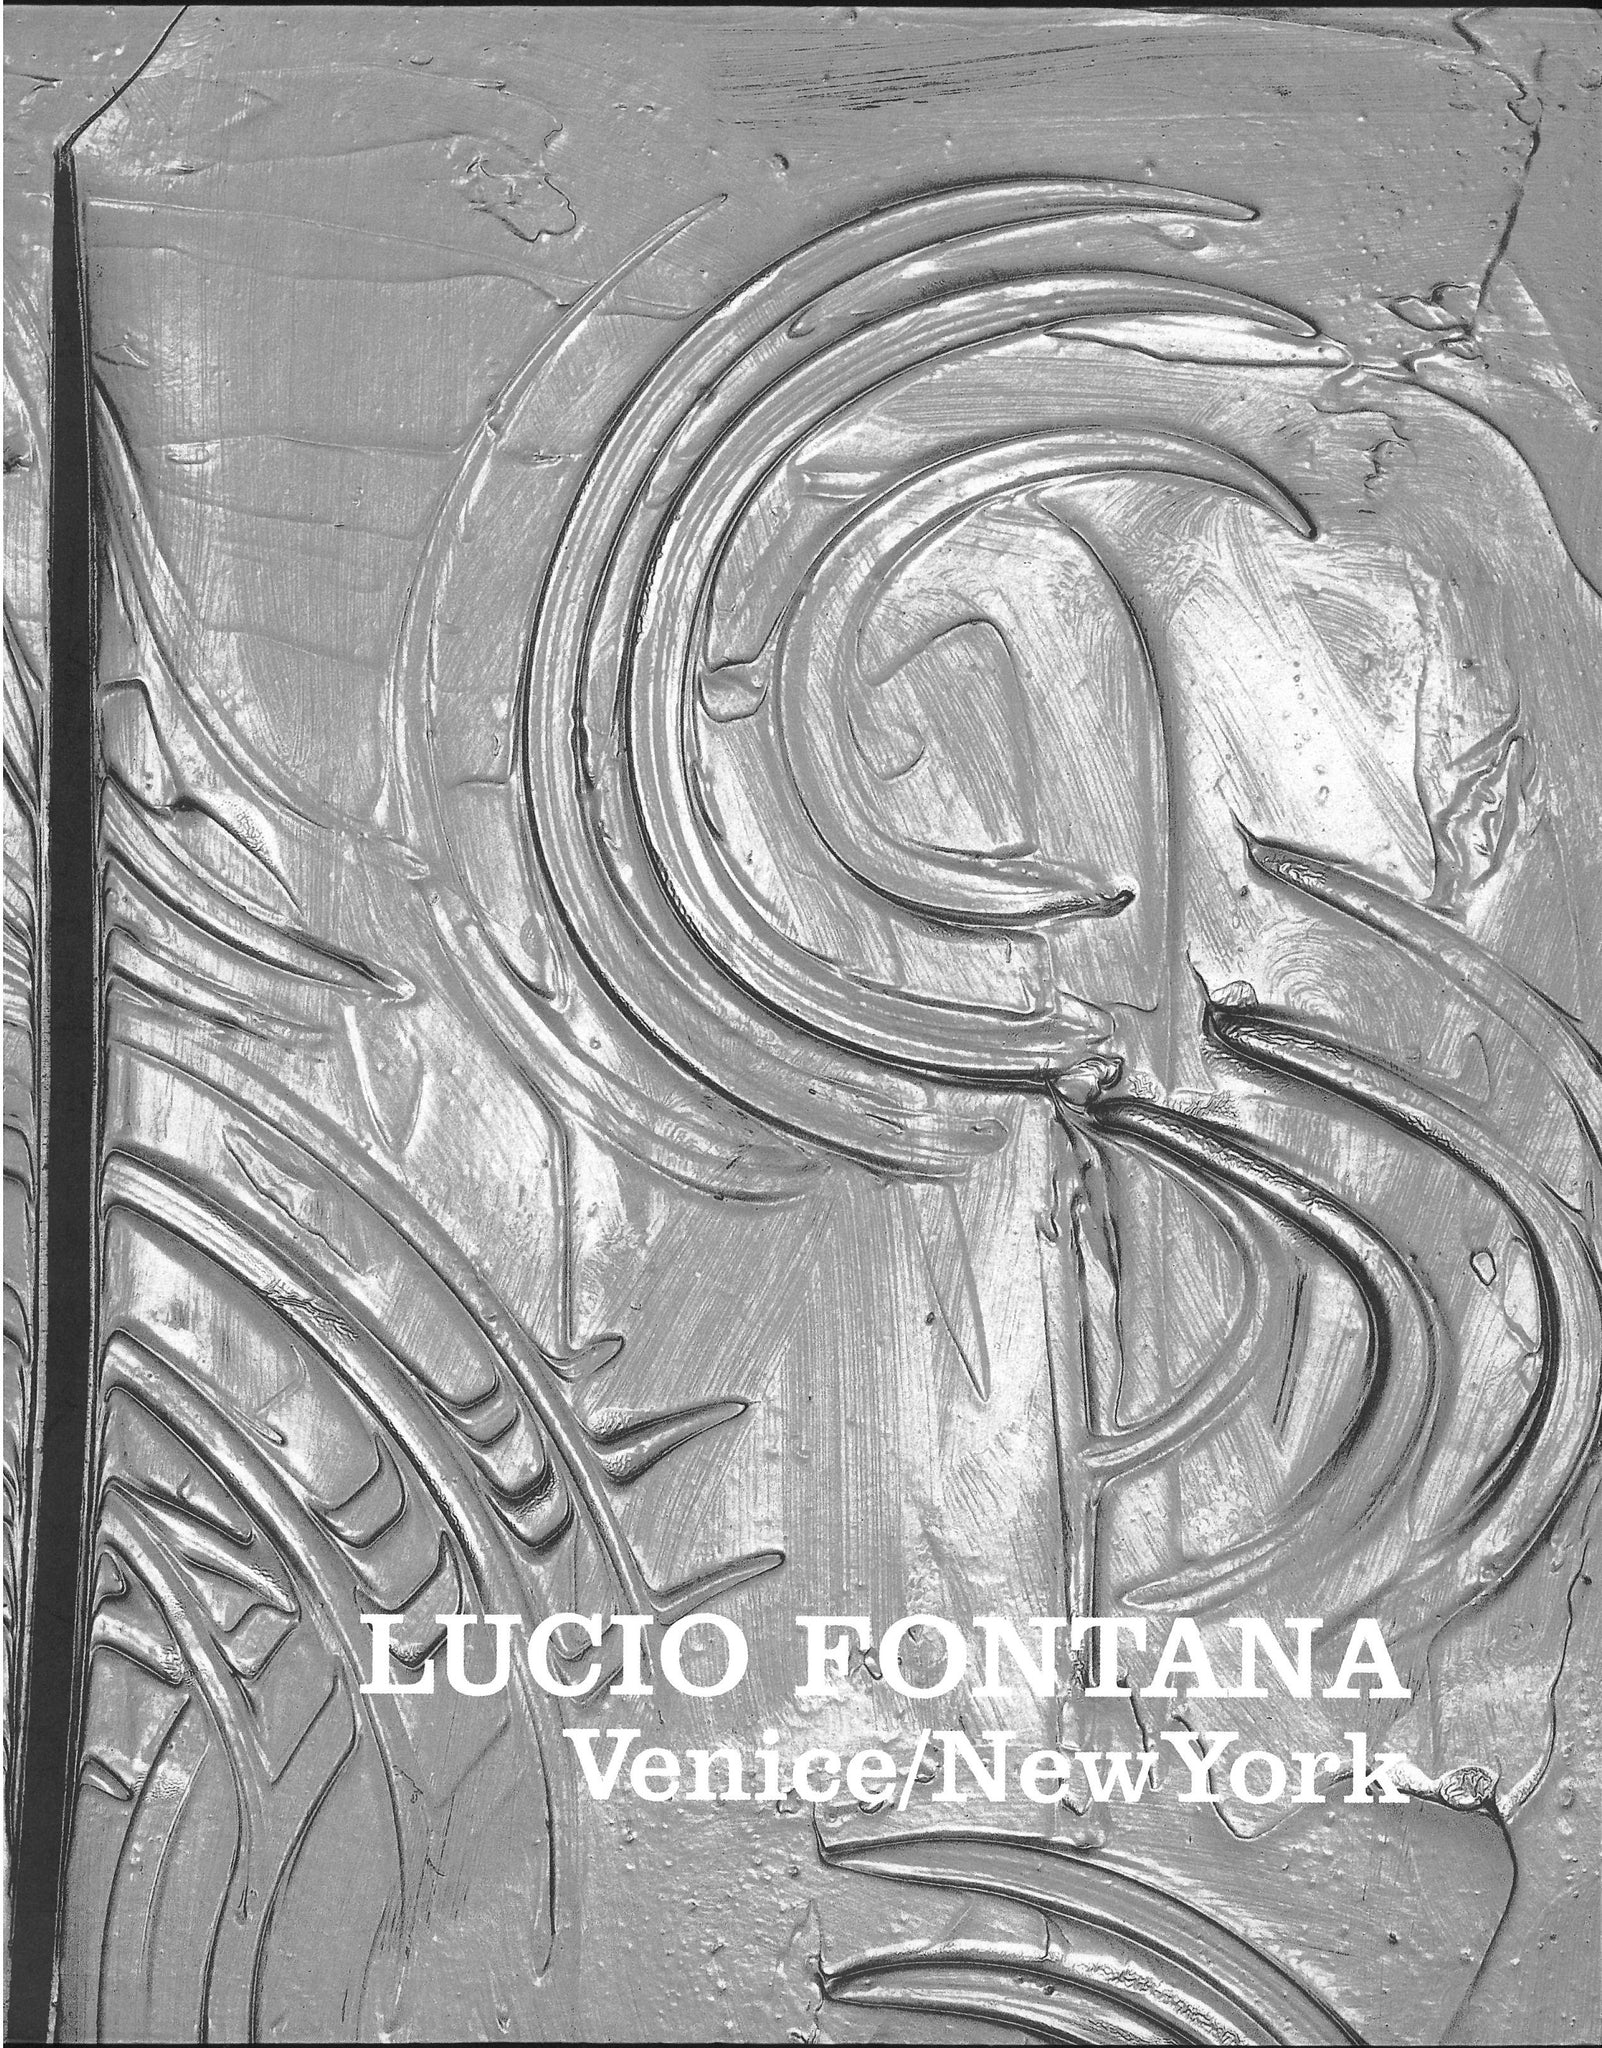 Lucio Fontana: Venice/New York